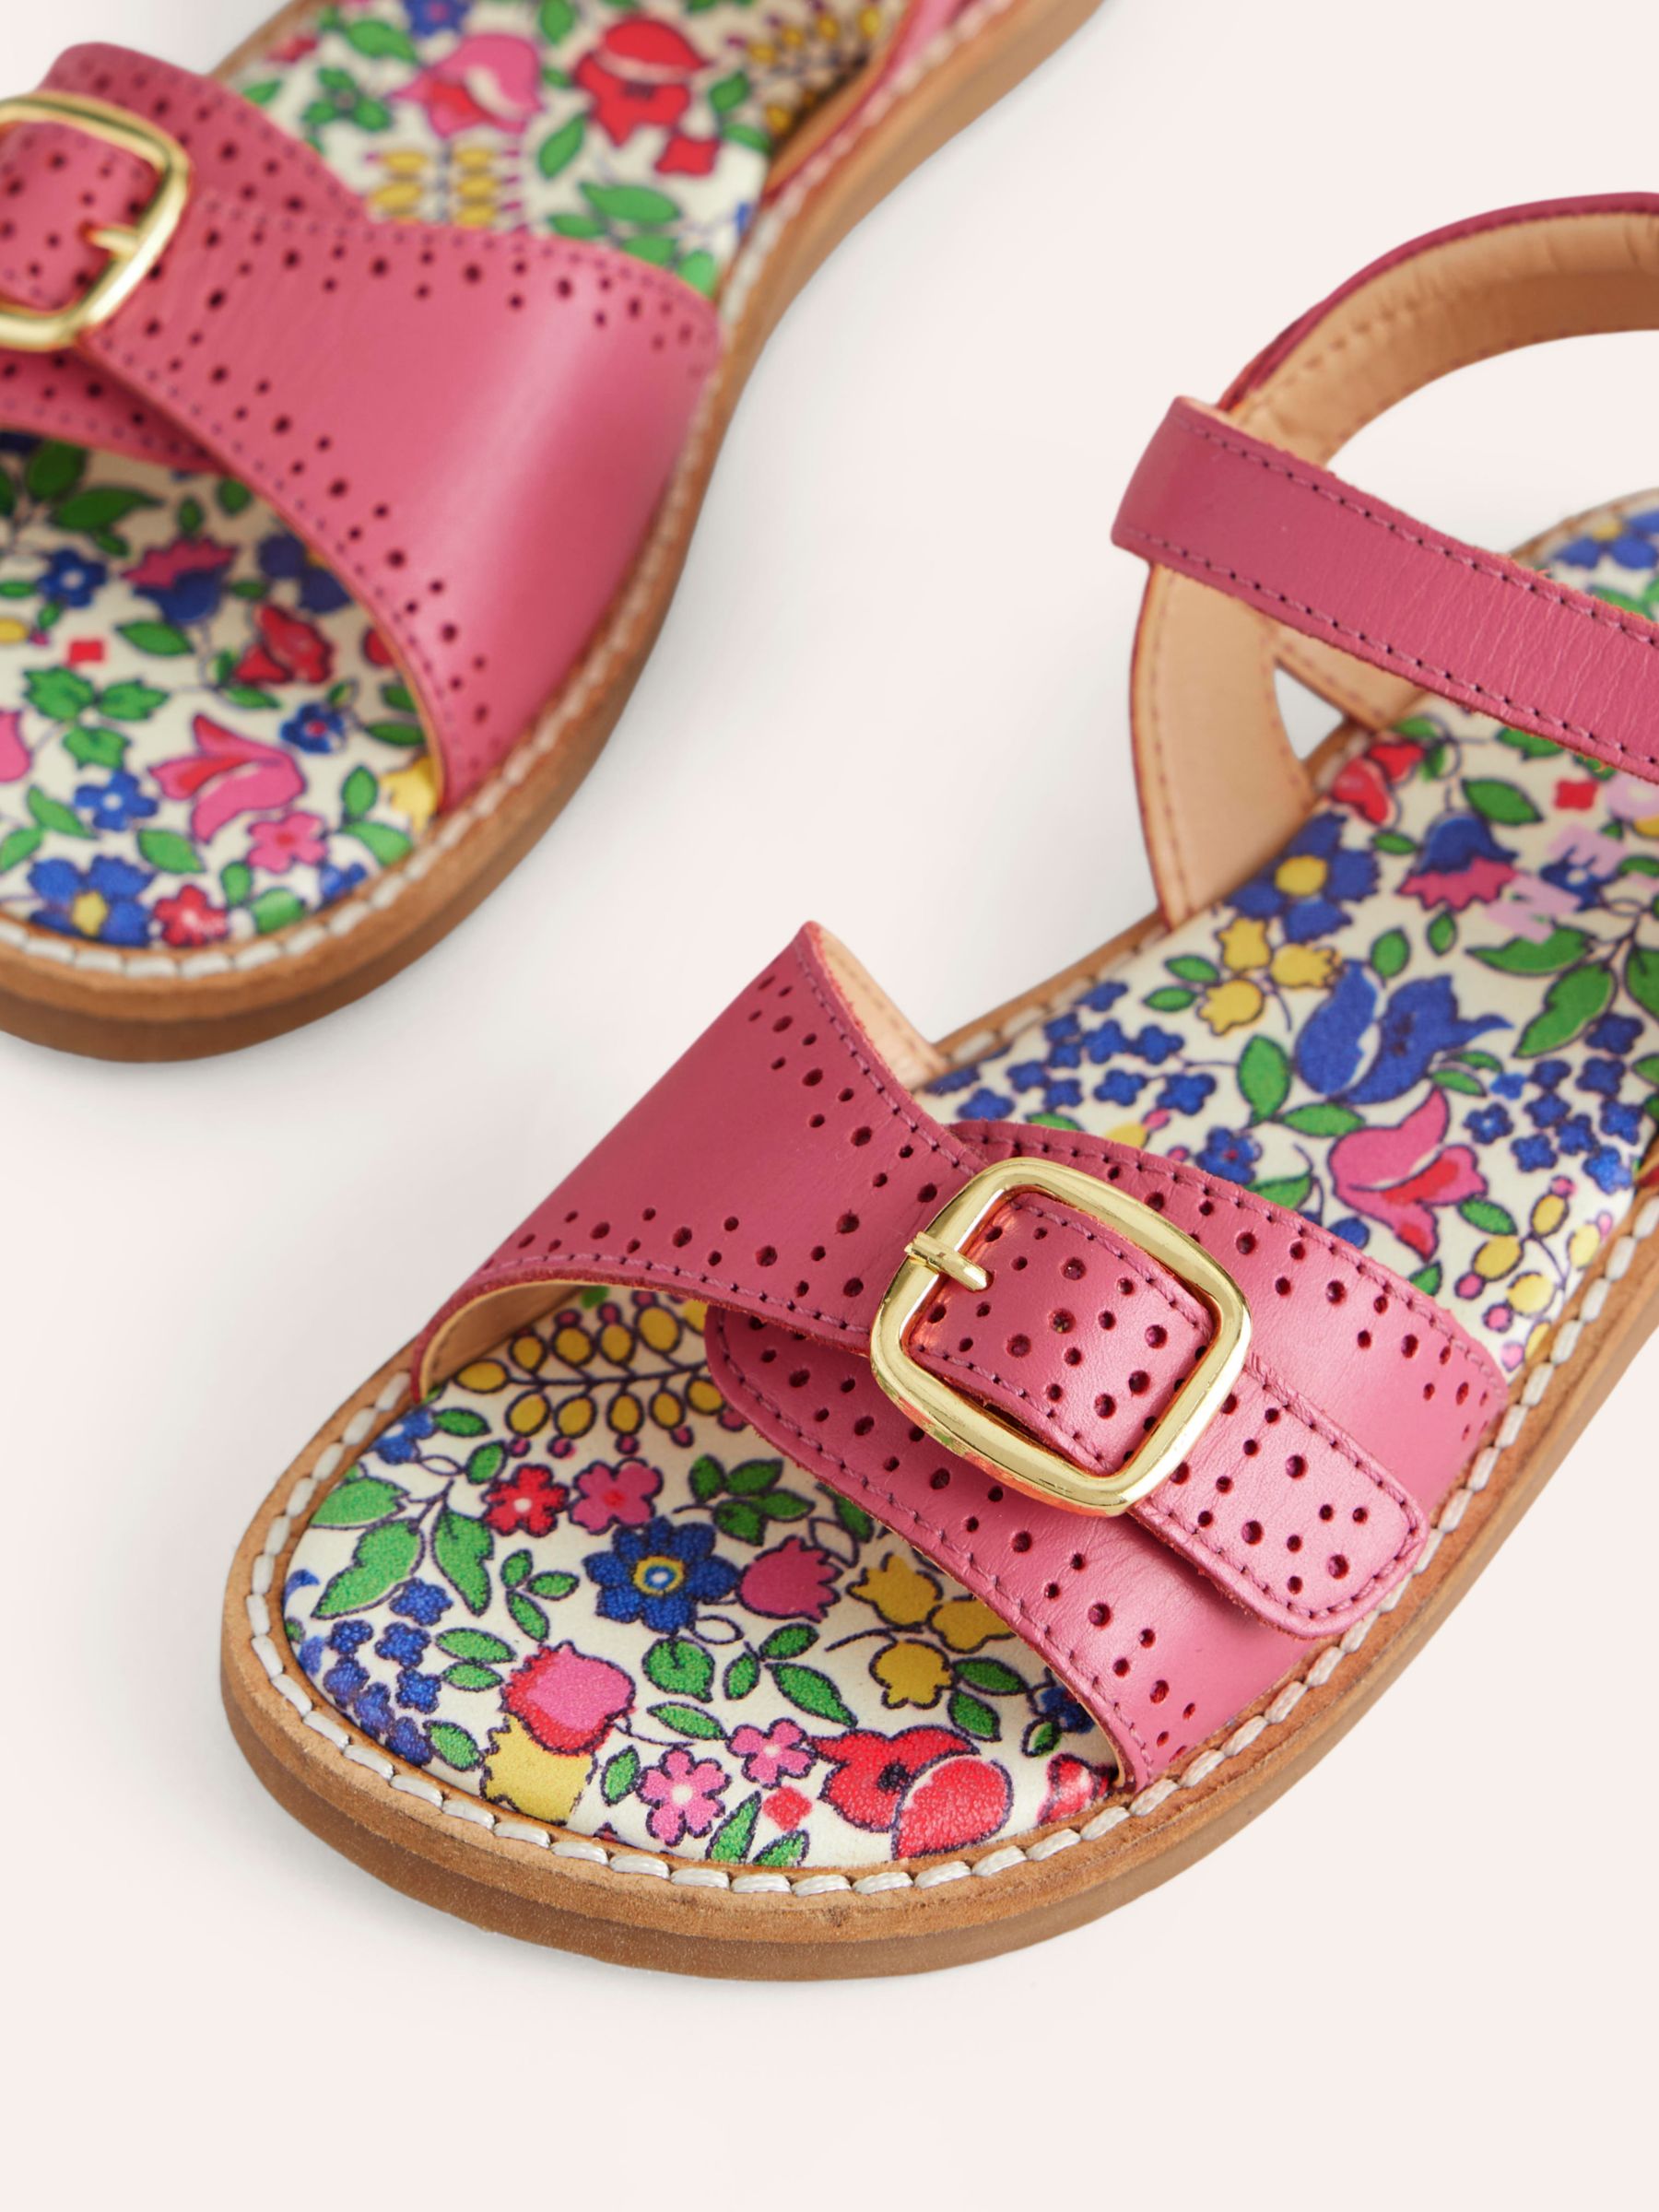 Buy Mini Boden Kids' Leather Buckle Sandals, Pink Online at johnlewis.com